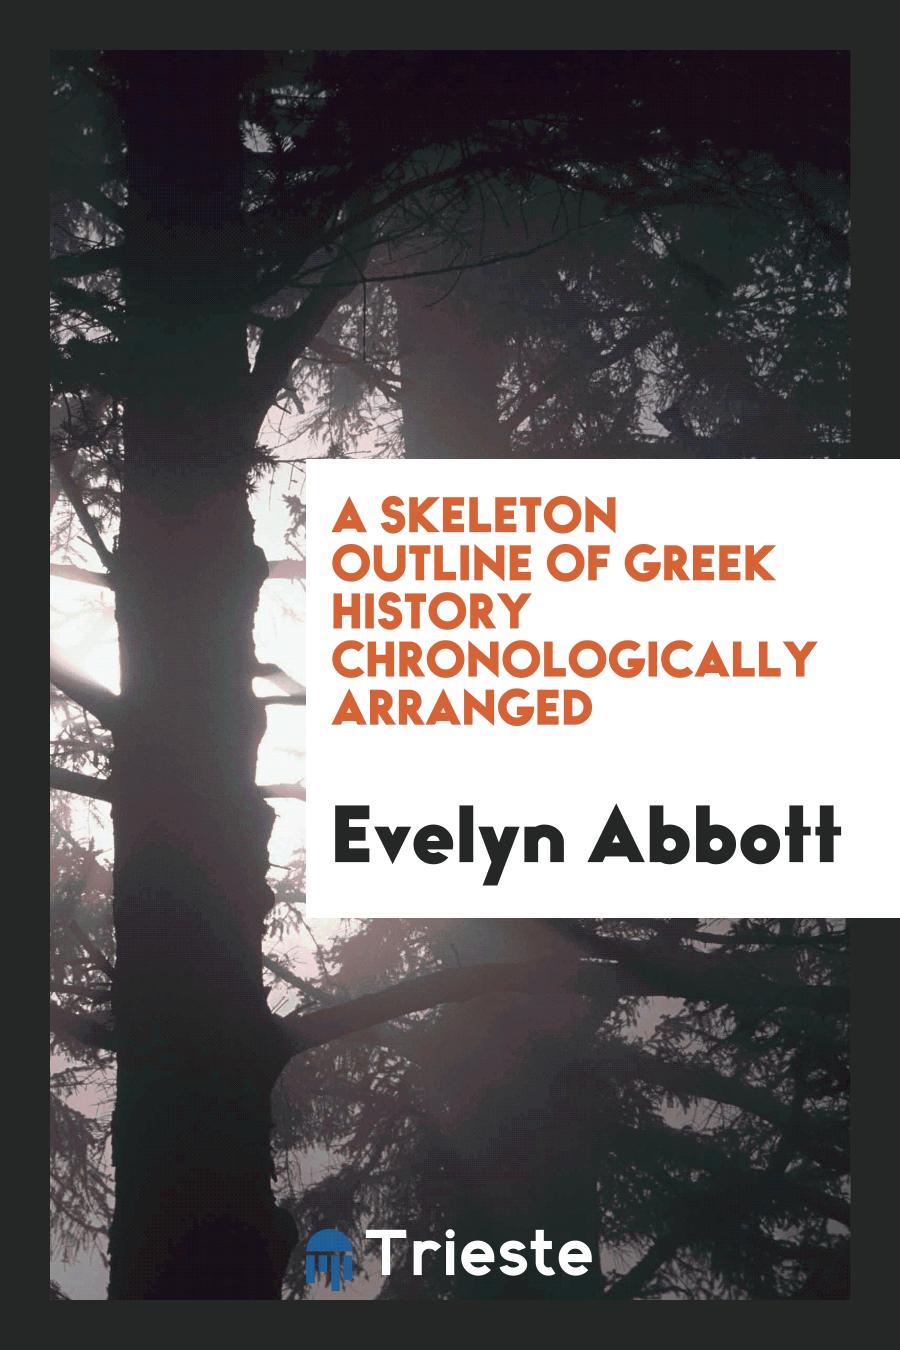 A Skeleton Outline of Greek History Chronologically Arranged